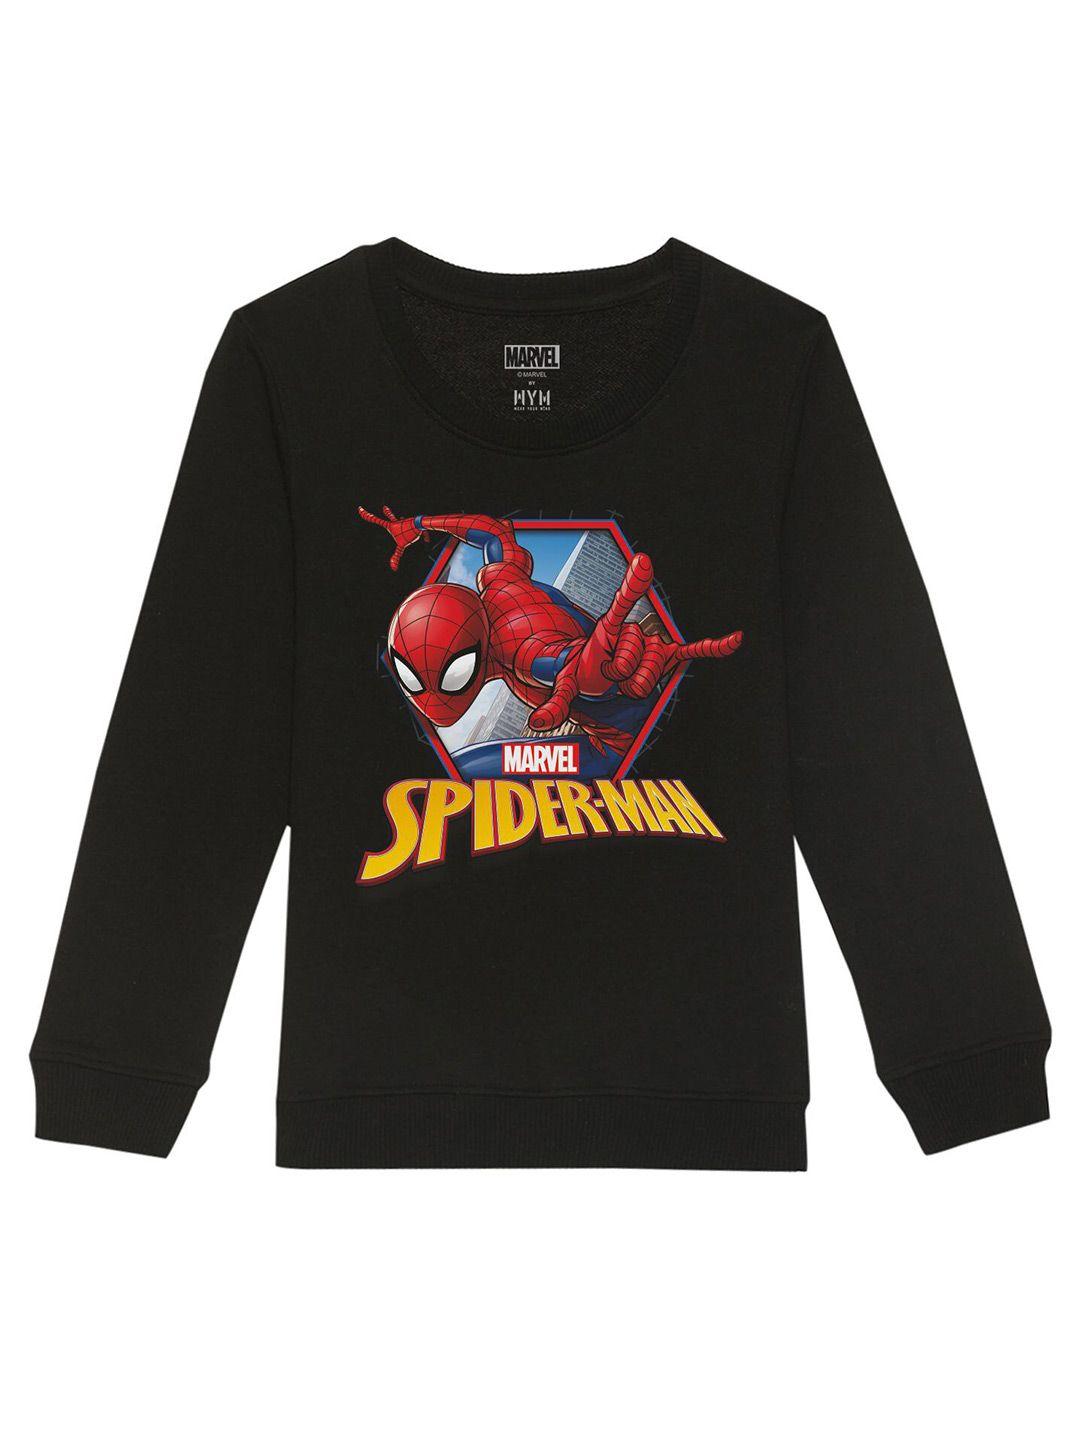 marvel by wear your mind unisex kids black spiderman printed sweatshirt